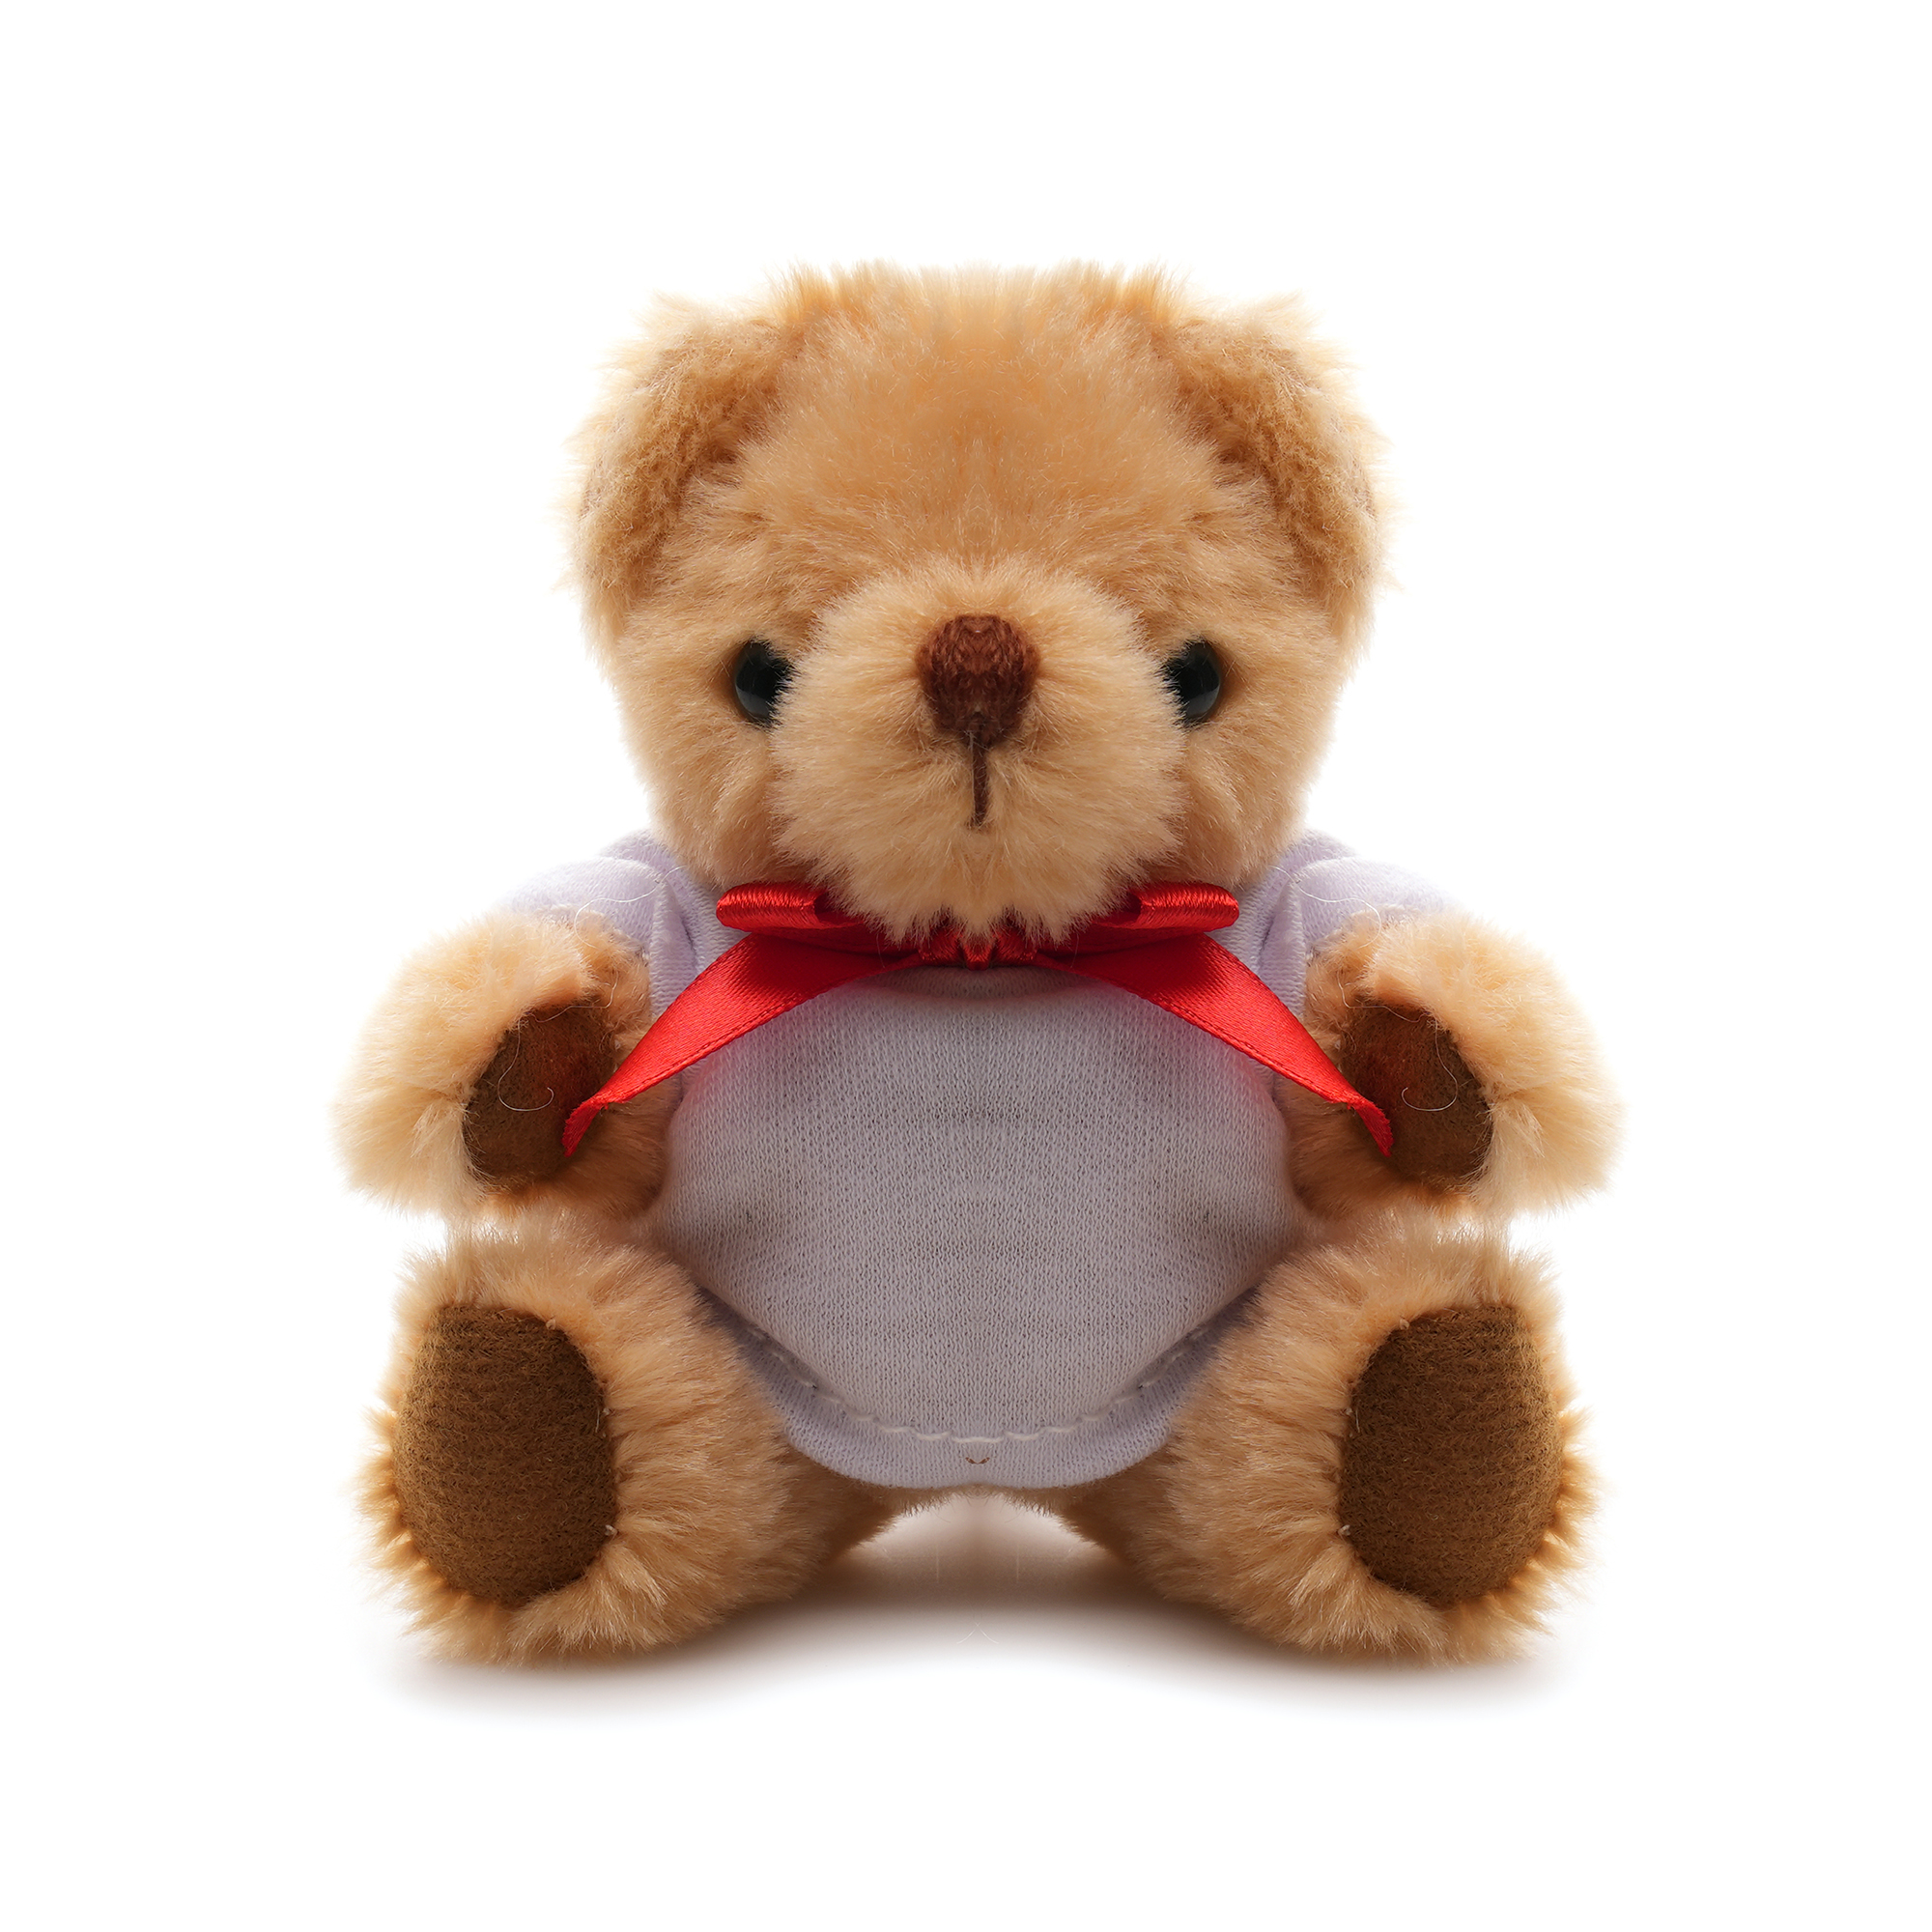 TB0004 2 - Patched Paw 18cm Teddy Bear